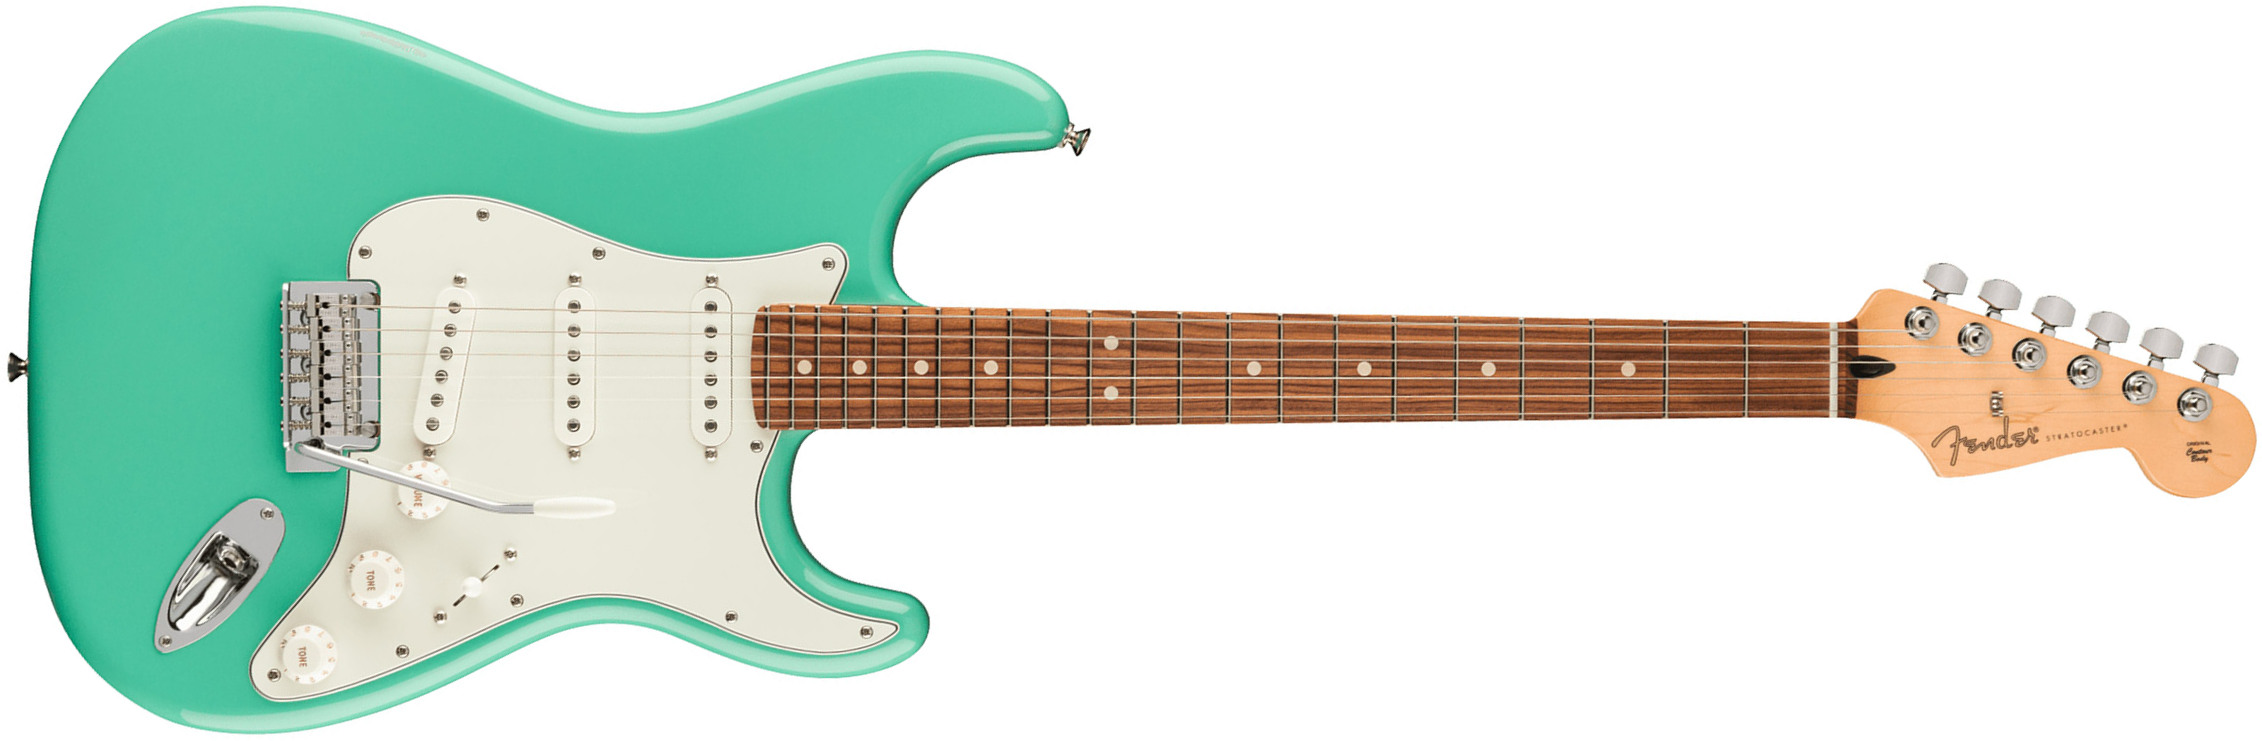 Fender Strat Player Mex 2023 3s Trem Pf - Seafoam Green - Guitarra eléctrica con forma de str. - Main picture